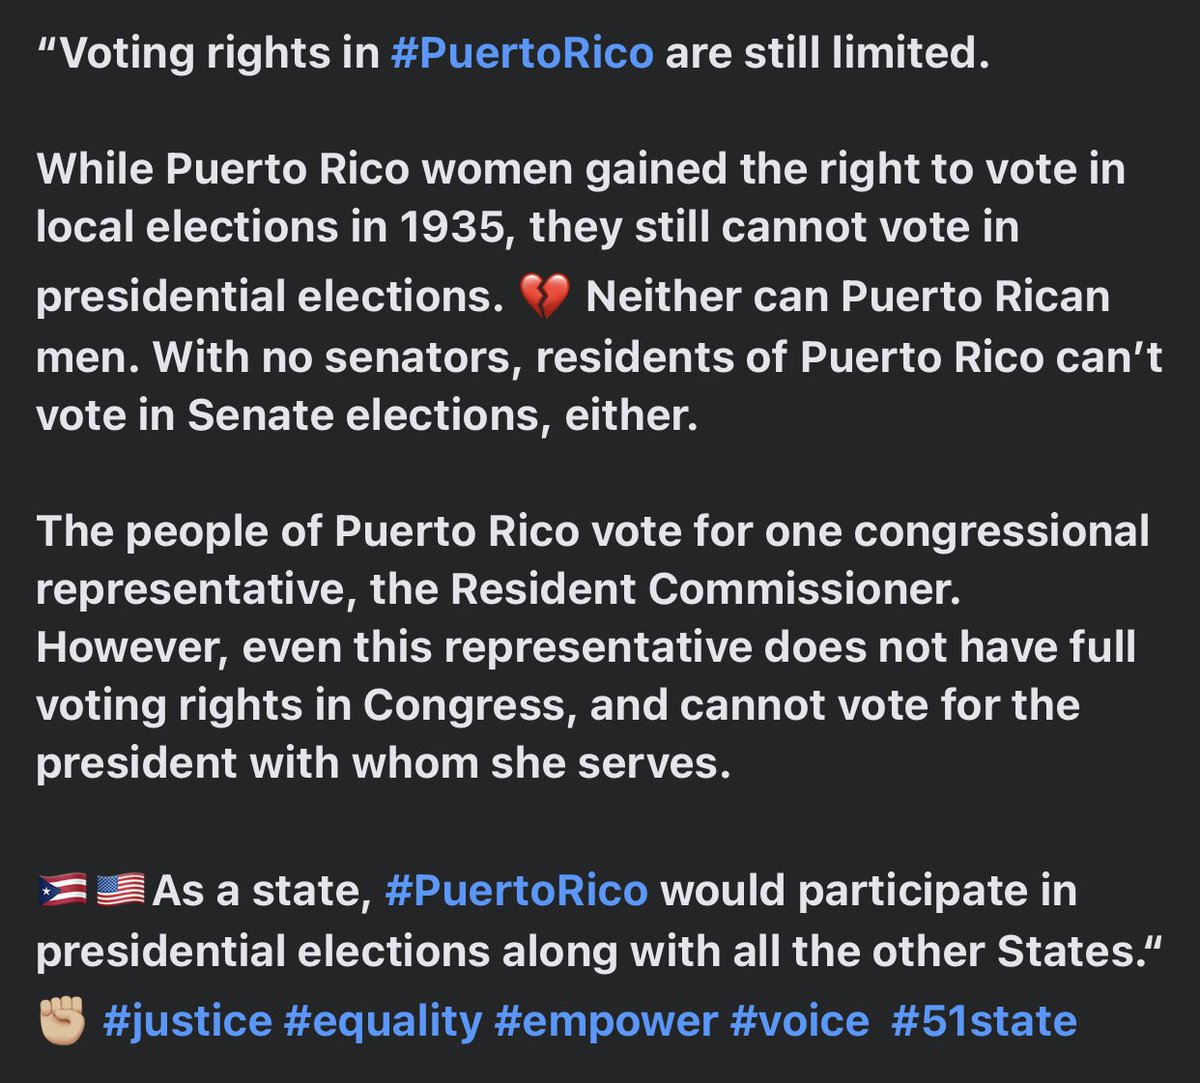 It’s time - puertoricoreport.com/when-did-puert… 🇵🇷✊🏼🇺🇸 archives.gov/milestone-docu… #decolonizethisplace #justice #equality #vote #voice